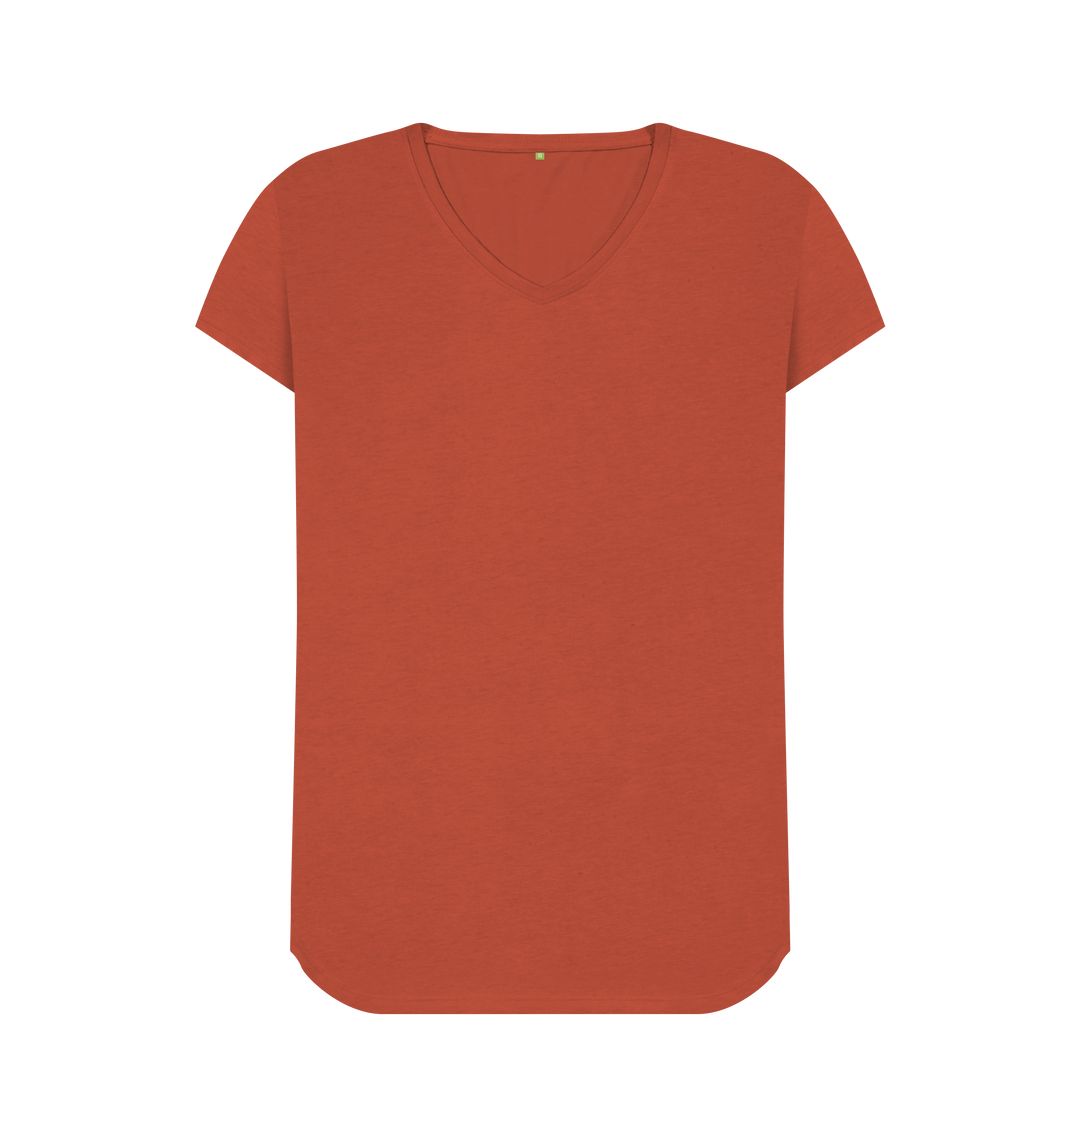 Rust Women's organic cotton v-neck t-shirt